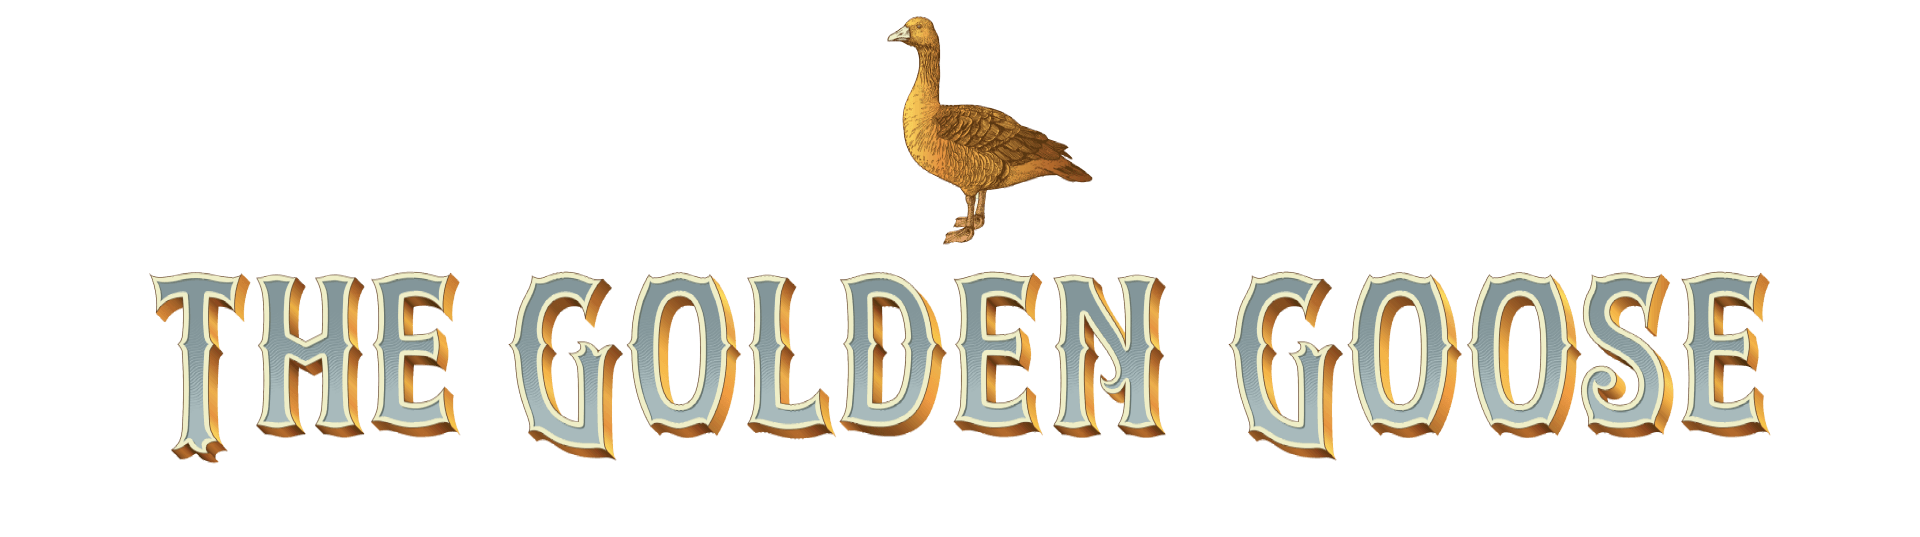 The Golden Goose Bar & Restaurant, Hunterstown, Co.Louth